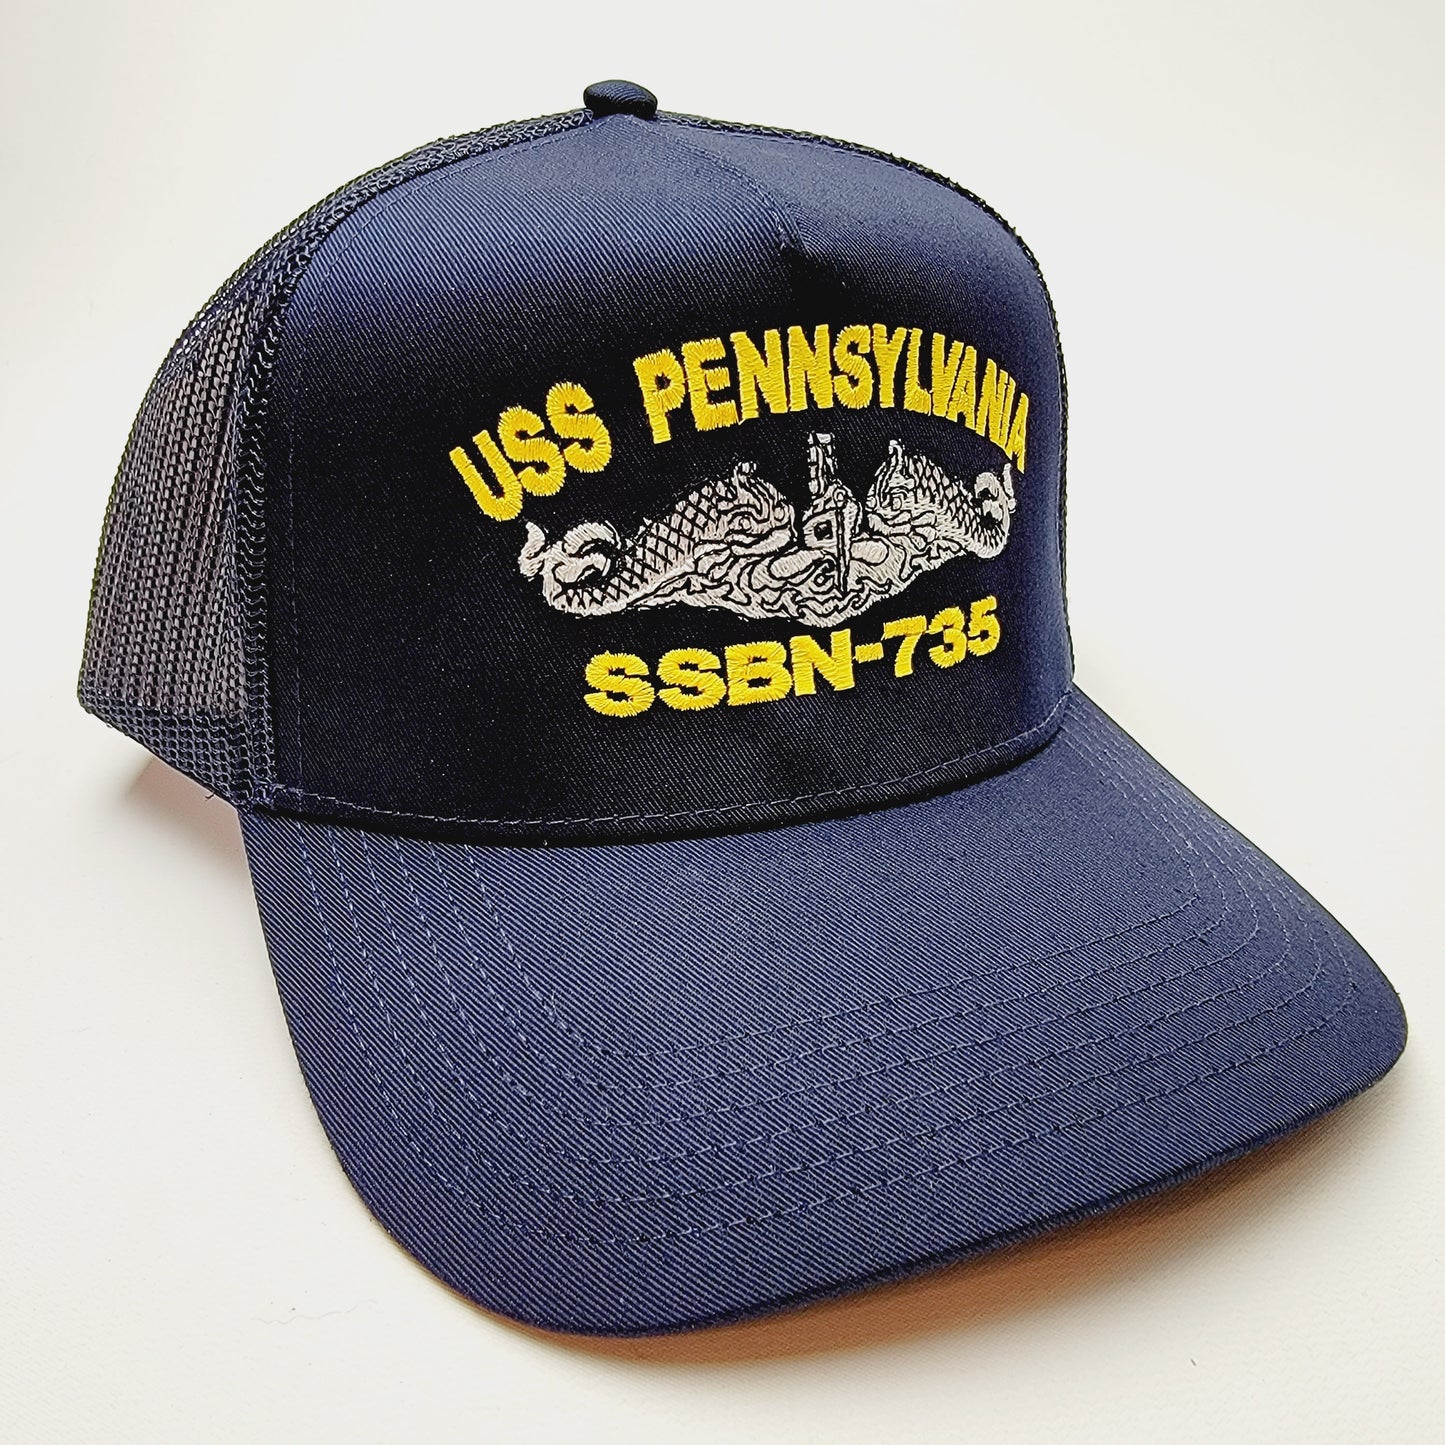 US NAVY USS PENNSYLVANIA SSBN-735 Embroidered Hat Baseball Cap Adjustable Blue